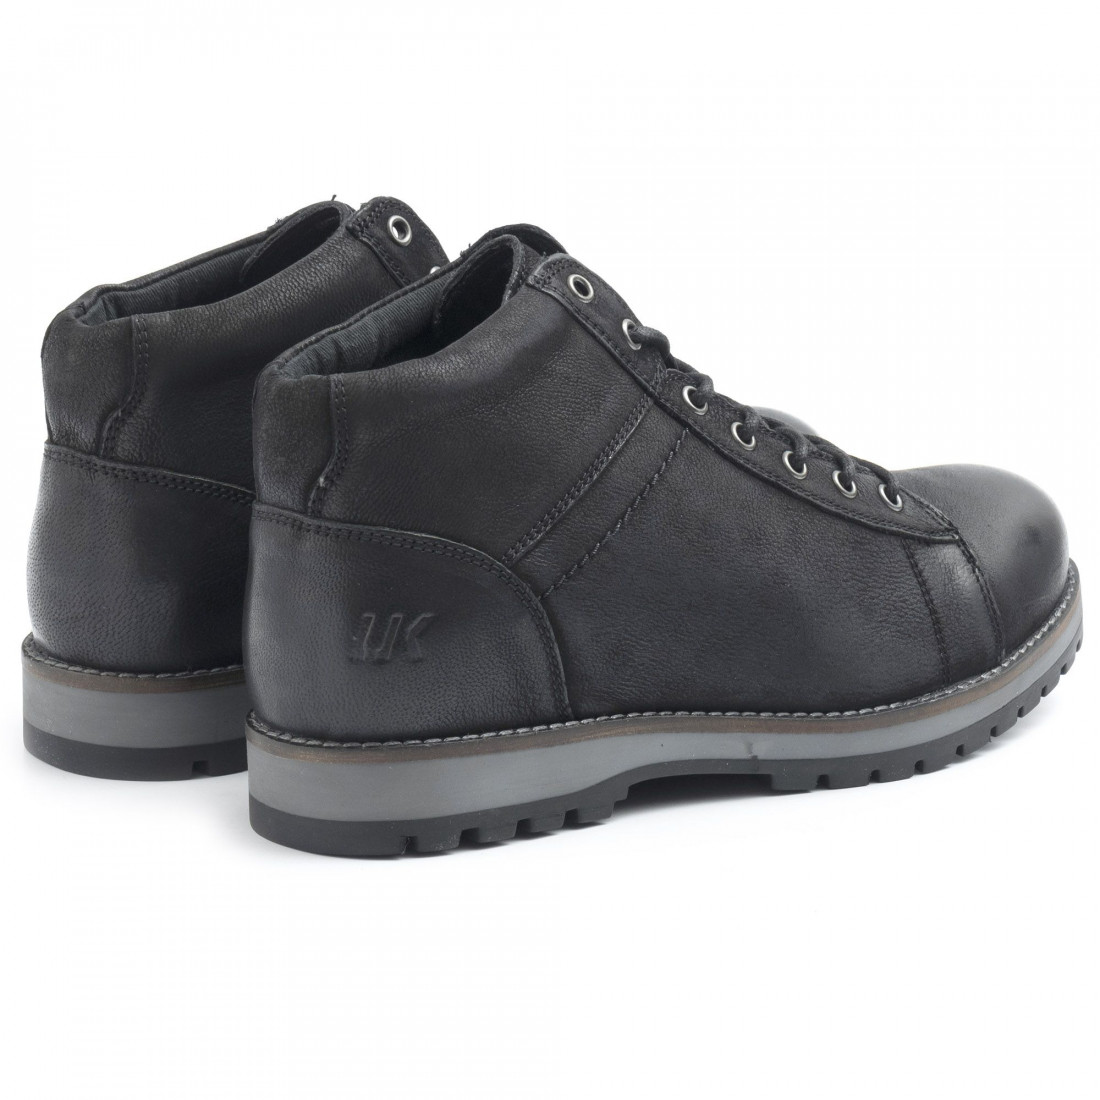 Black nabuck leather Lumberjack Roman ankle boots